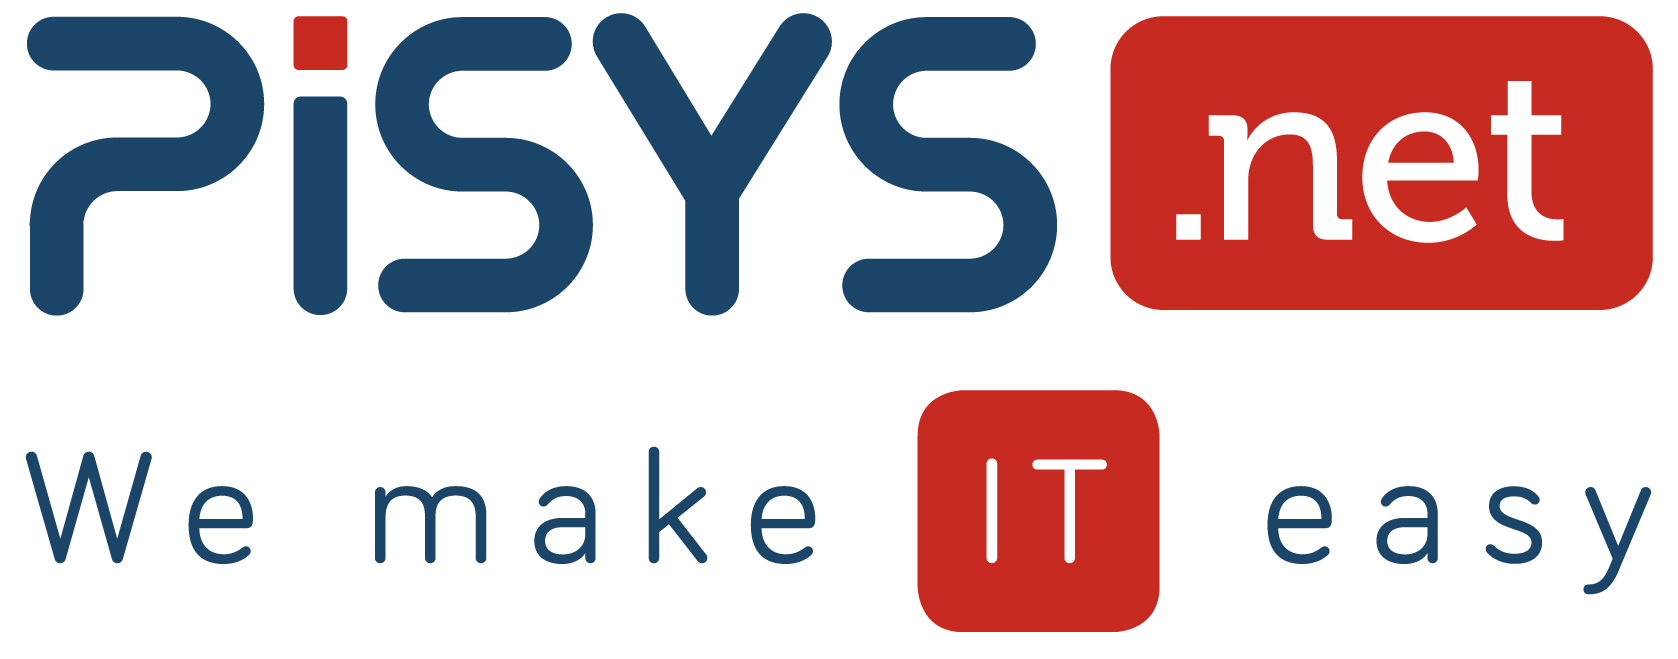 Pisys.net logo